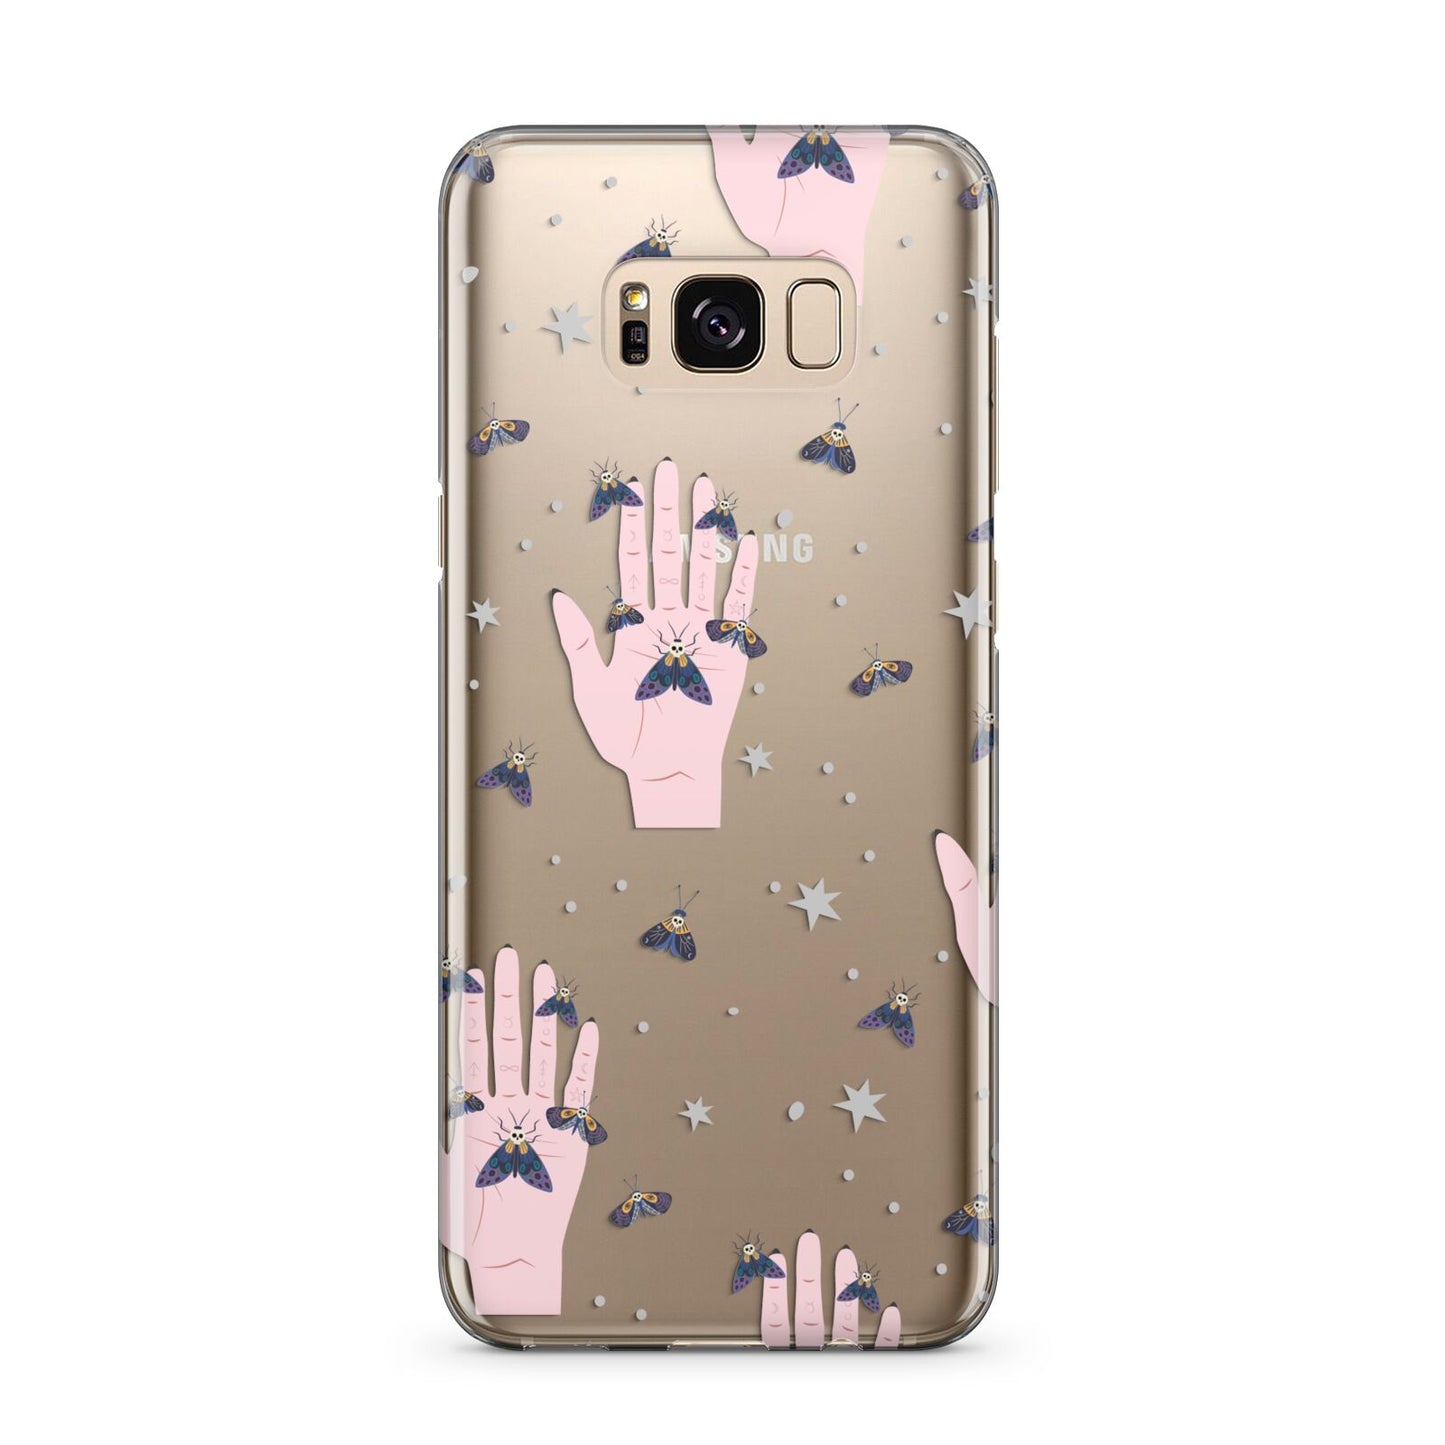 Fortune Teller Hands and Skull Moths Samsung Galaxy S8 Plus Case